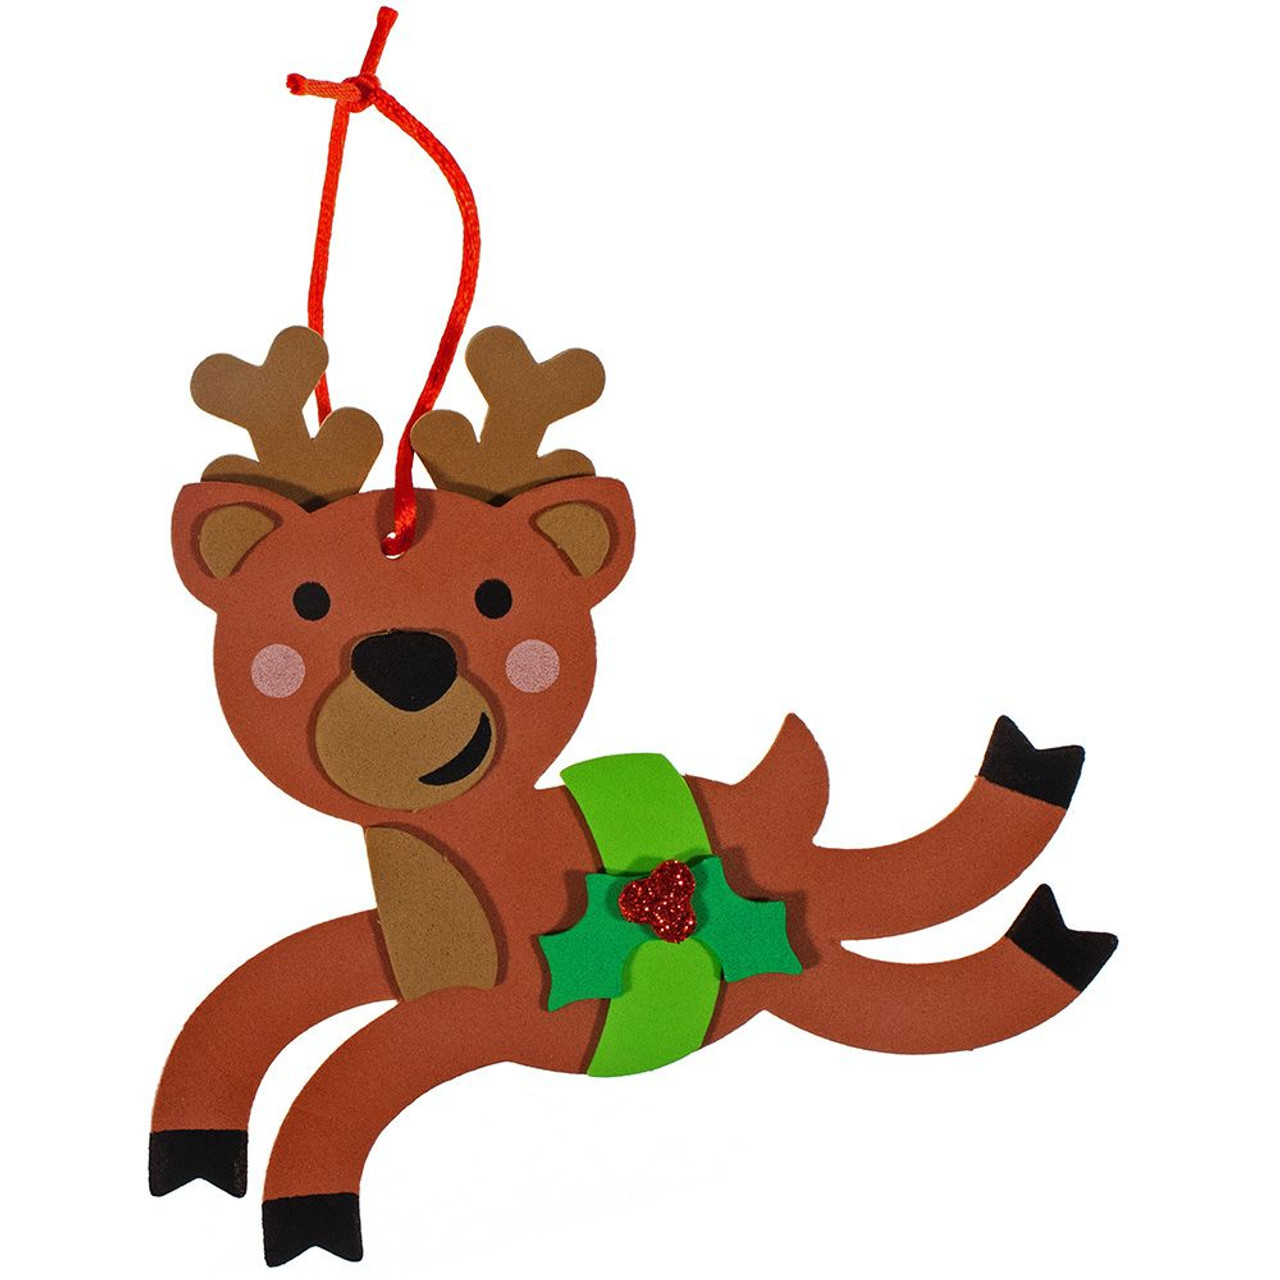 Christmas DIY Ornament Kit, DIY Reindeer Ornament Kit, Ornament DIY